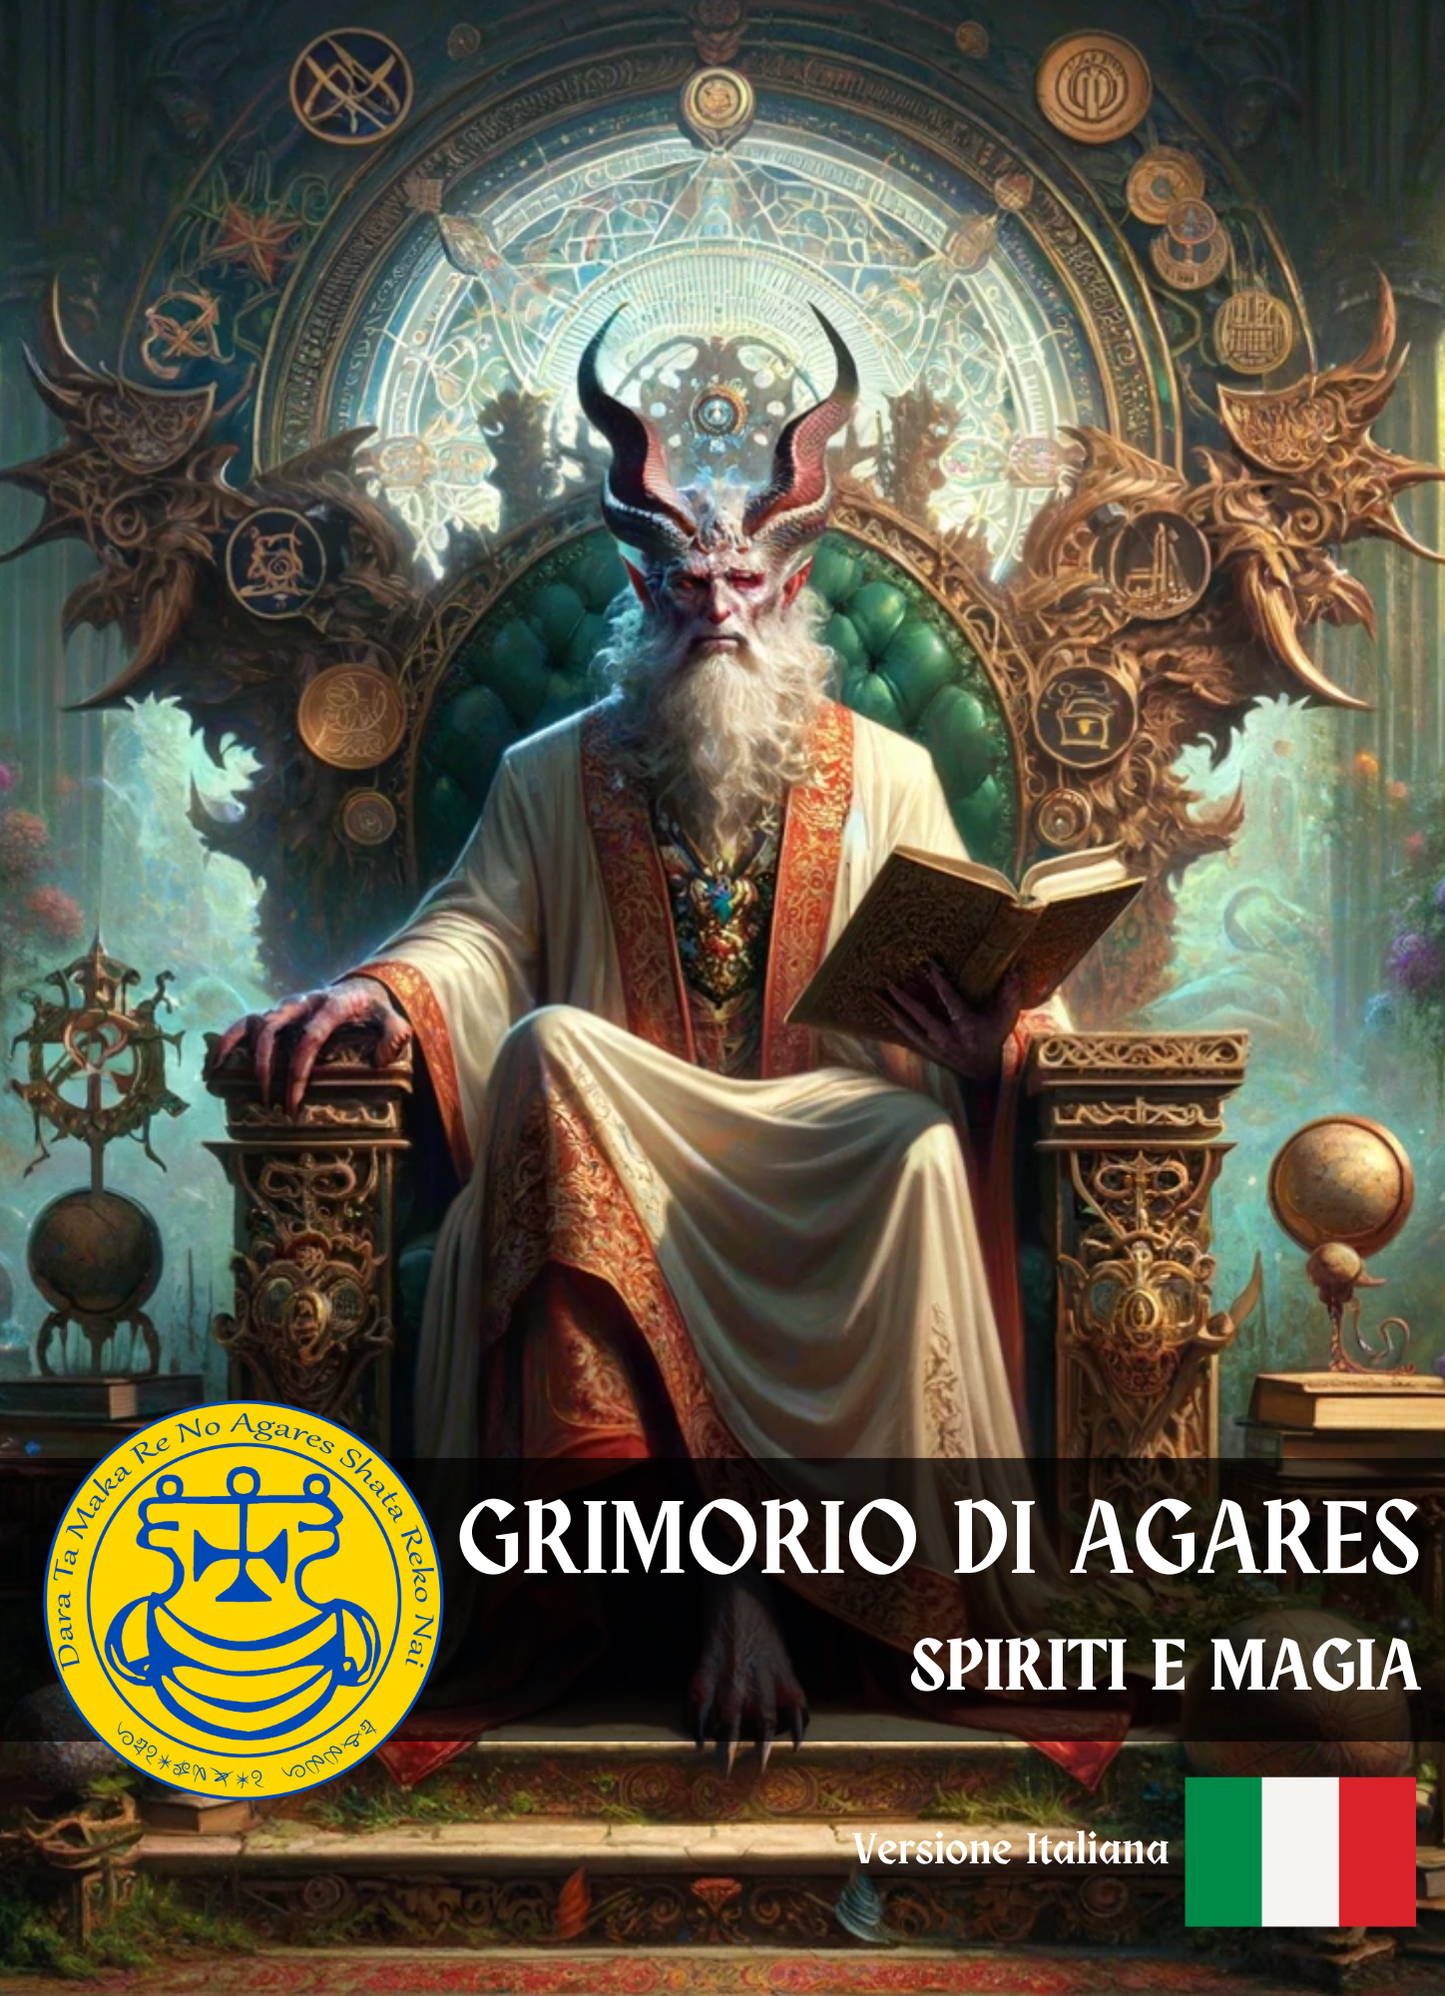 Grimoire ຂອງ Agares ການສະກົດຄໍາ & ພິທີກໍາສໍາລັບການຕິດຕໍ່ມິດຕະພາບແລະສັງຄົມເພື່ອສ້າງຄວາມເຂັ້ມແຂງຕົວທ່ານເອງ - Abraxas Amulets ® Magic ♾️ Talismans ♾️ ການລິເລີ່ມ